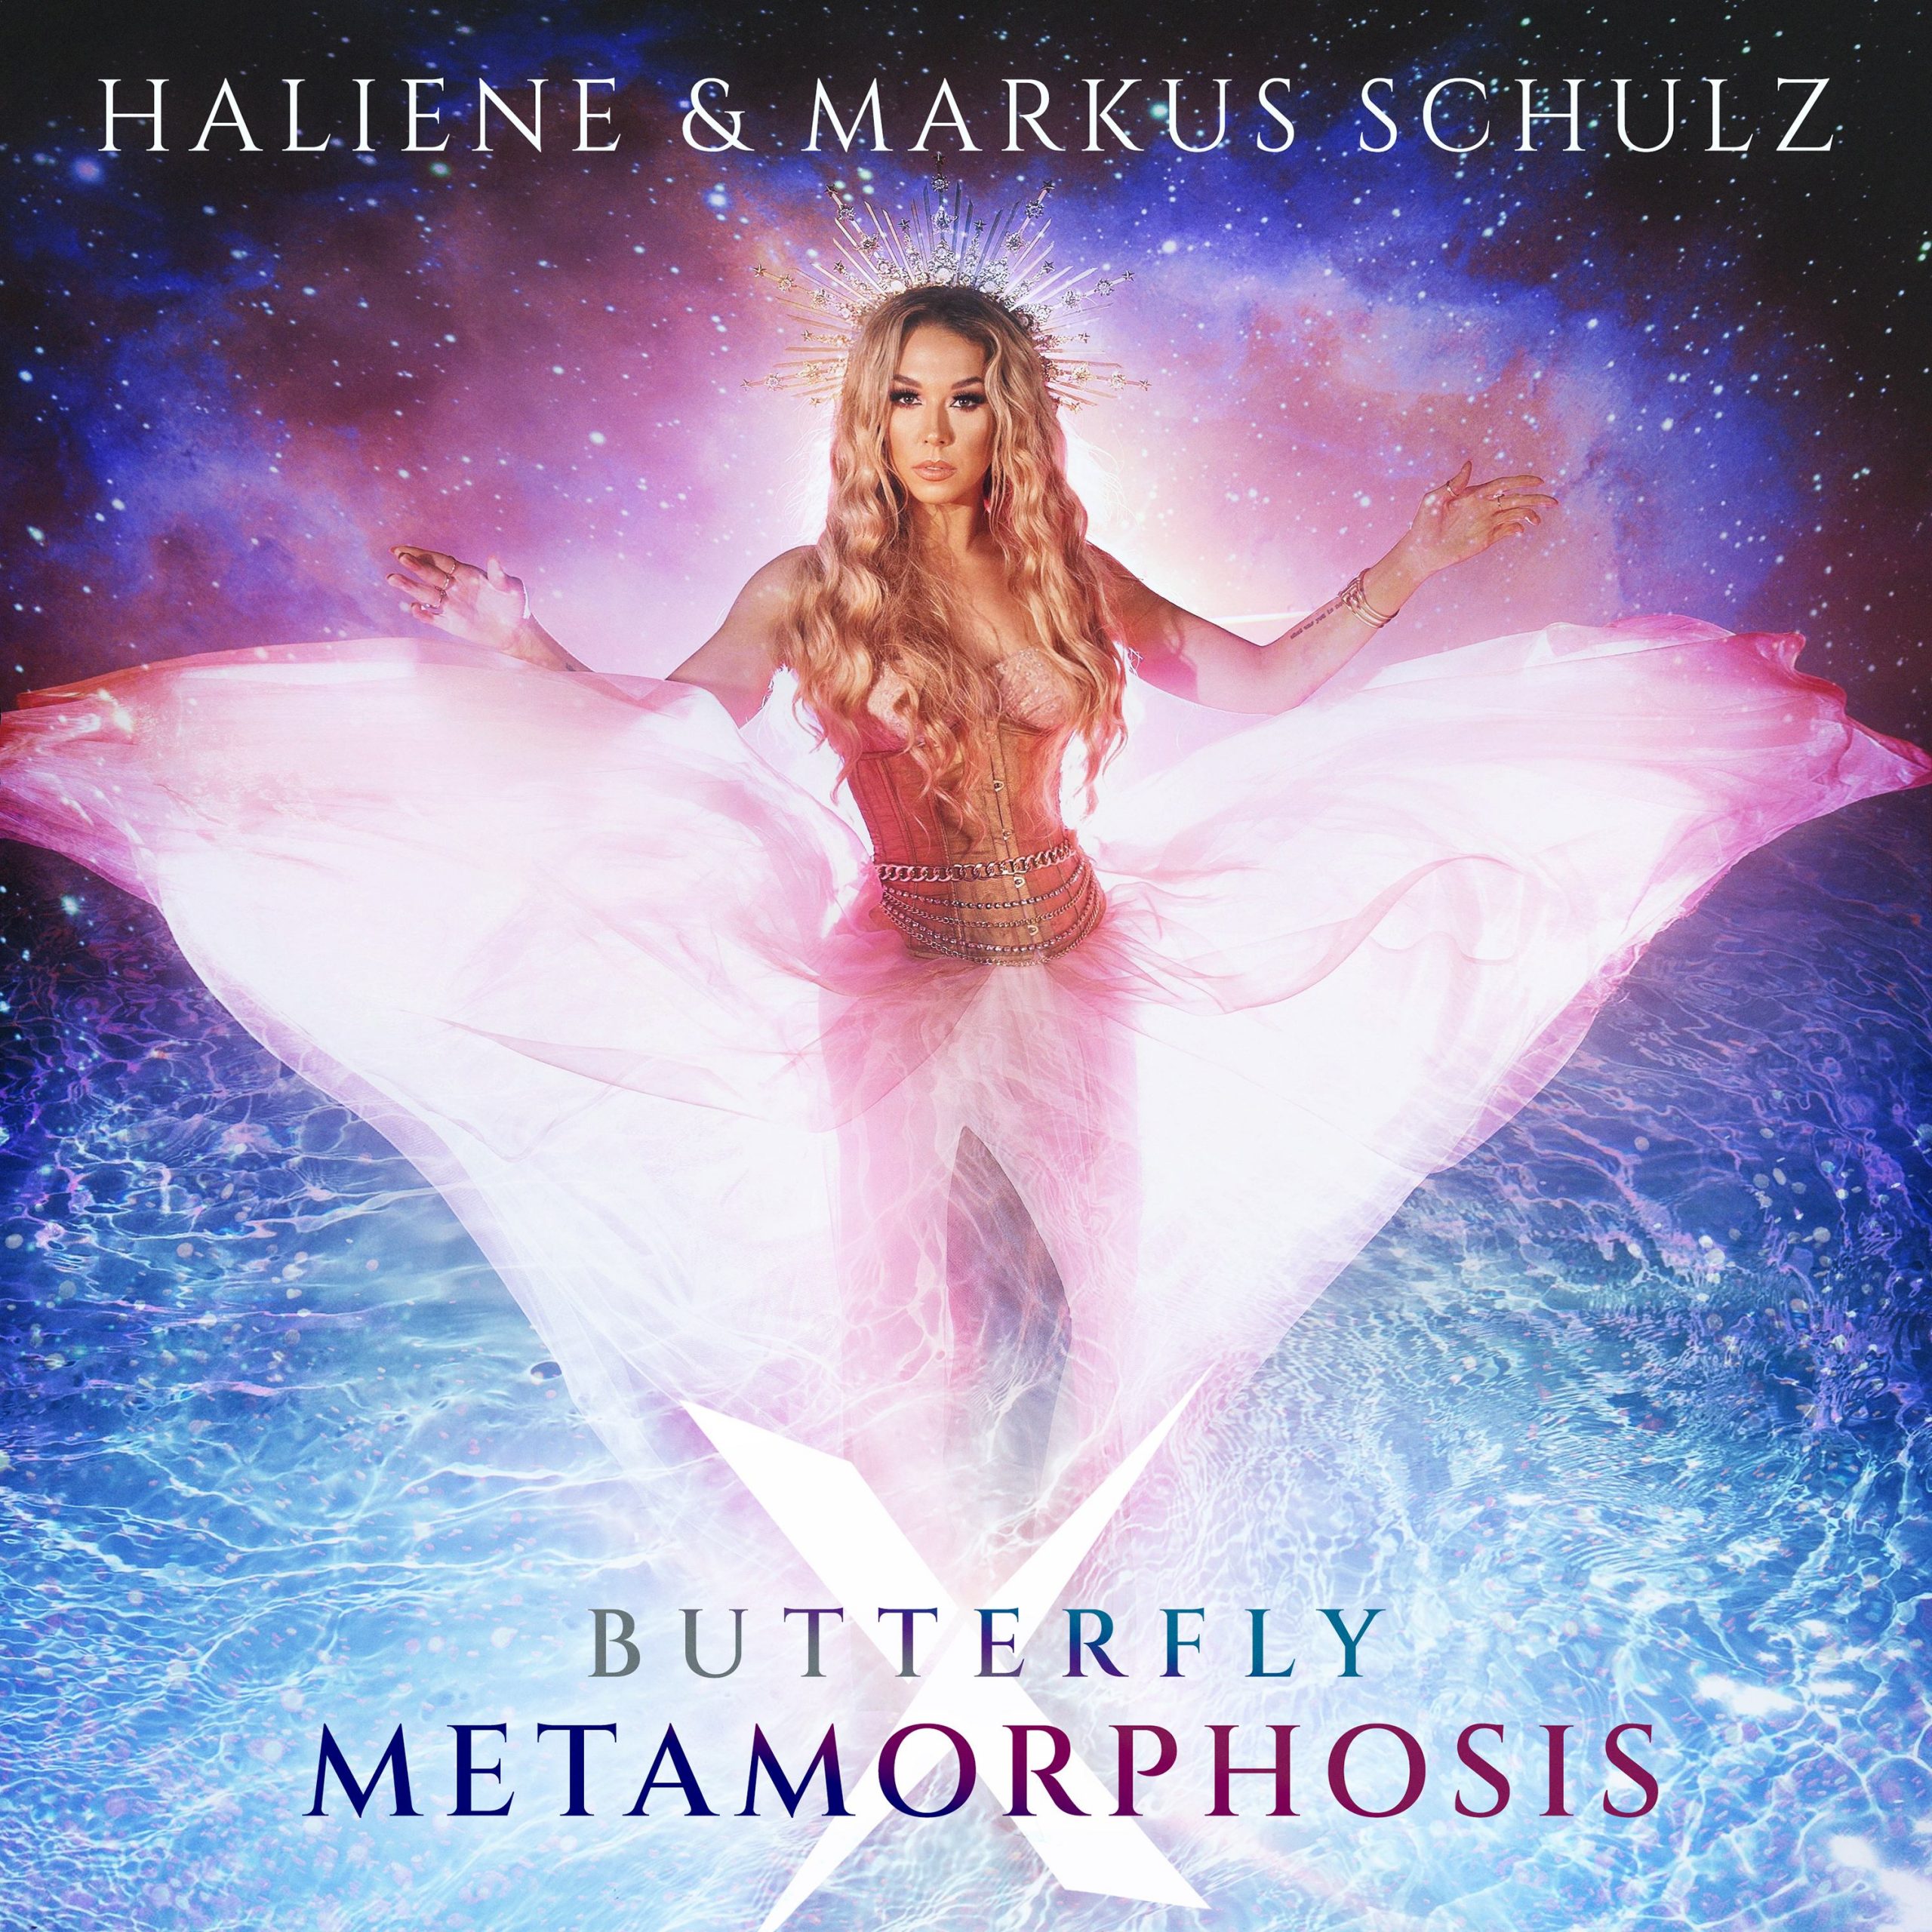 HALIENE & Markus Schulz Evolve 2 Tracks Into 1 Masterpiece With “Butterfly x Metamorphosis”